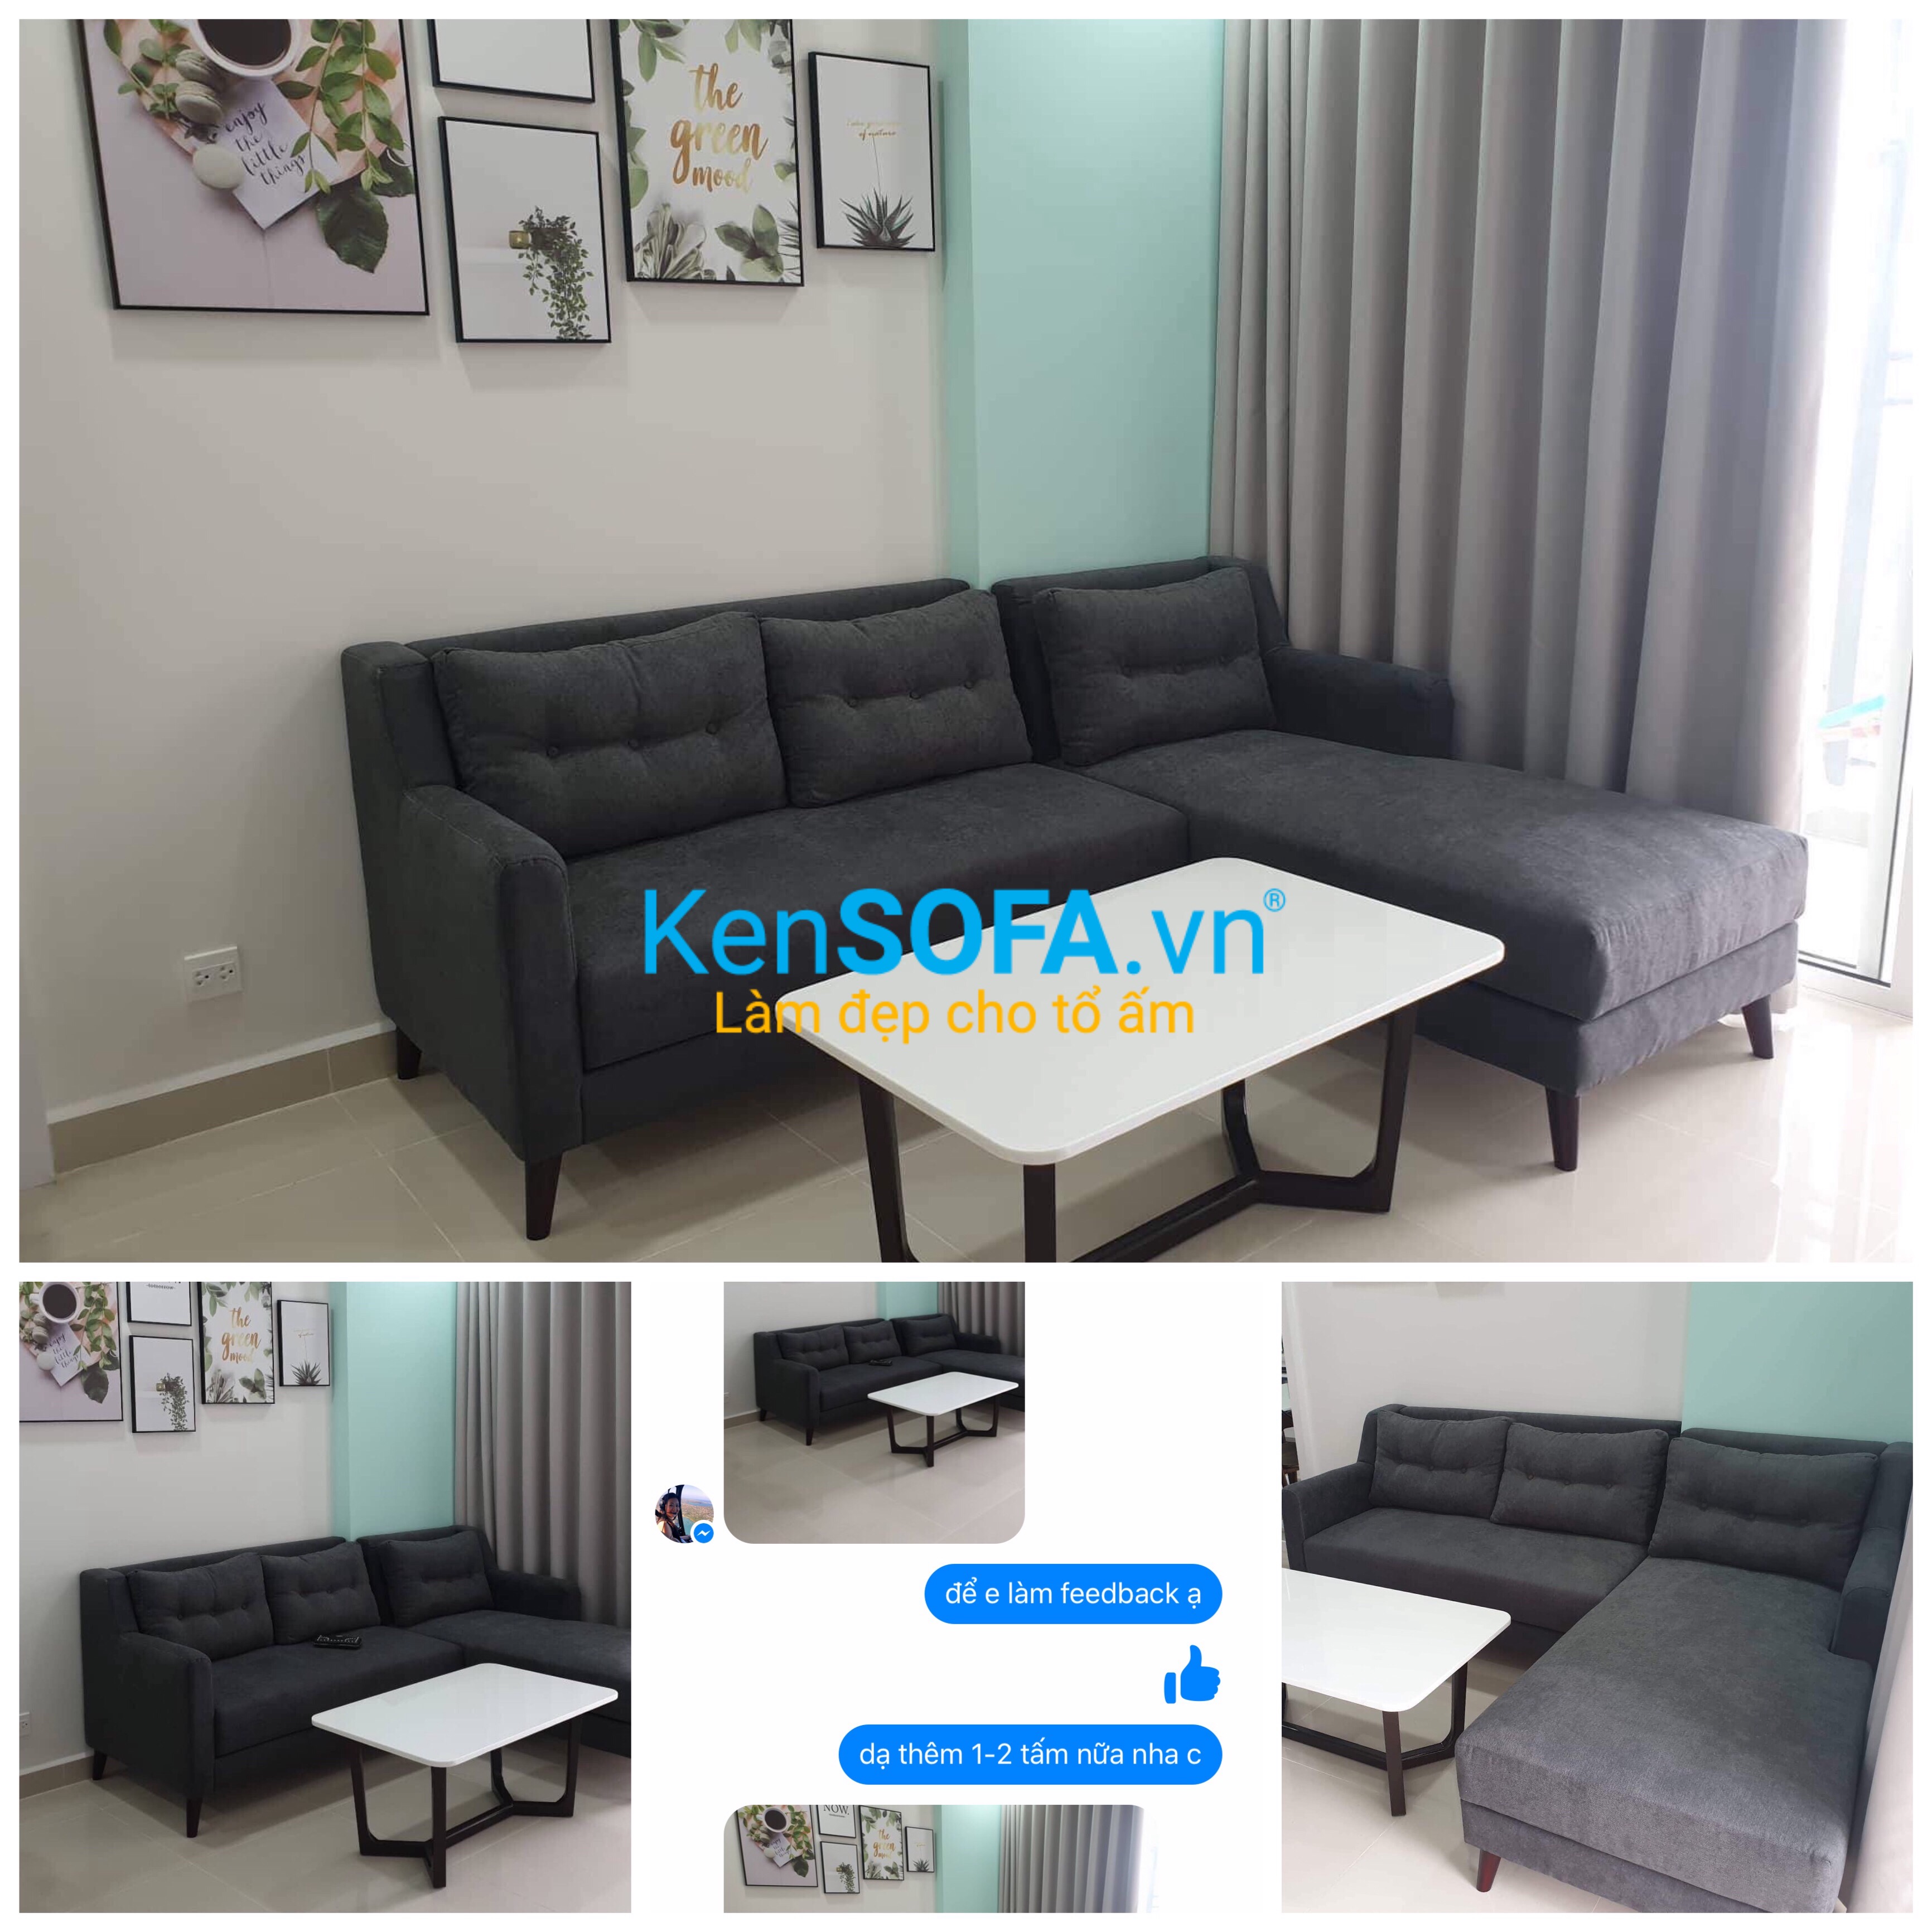 Chọn ghế sofa mini giá rẻ tại KenSOFA